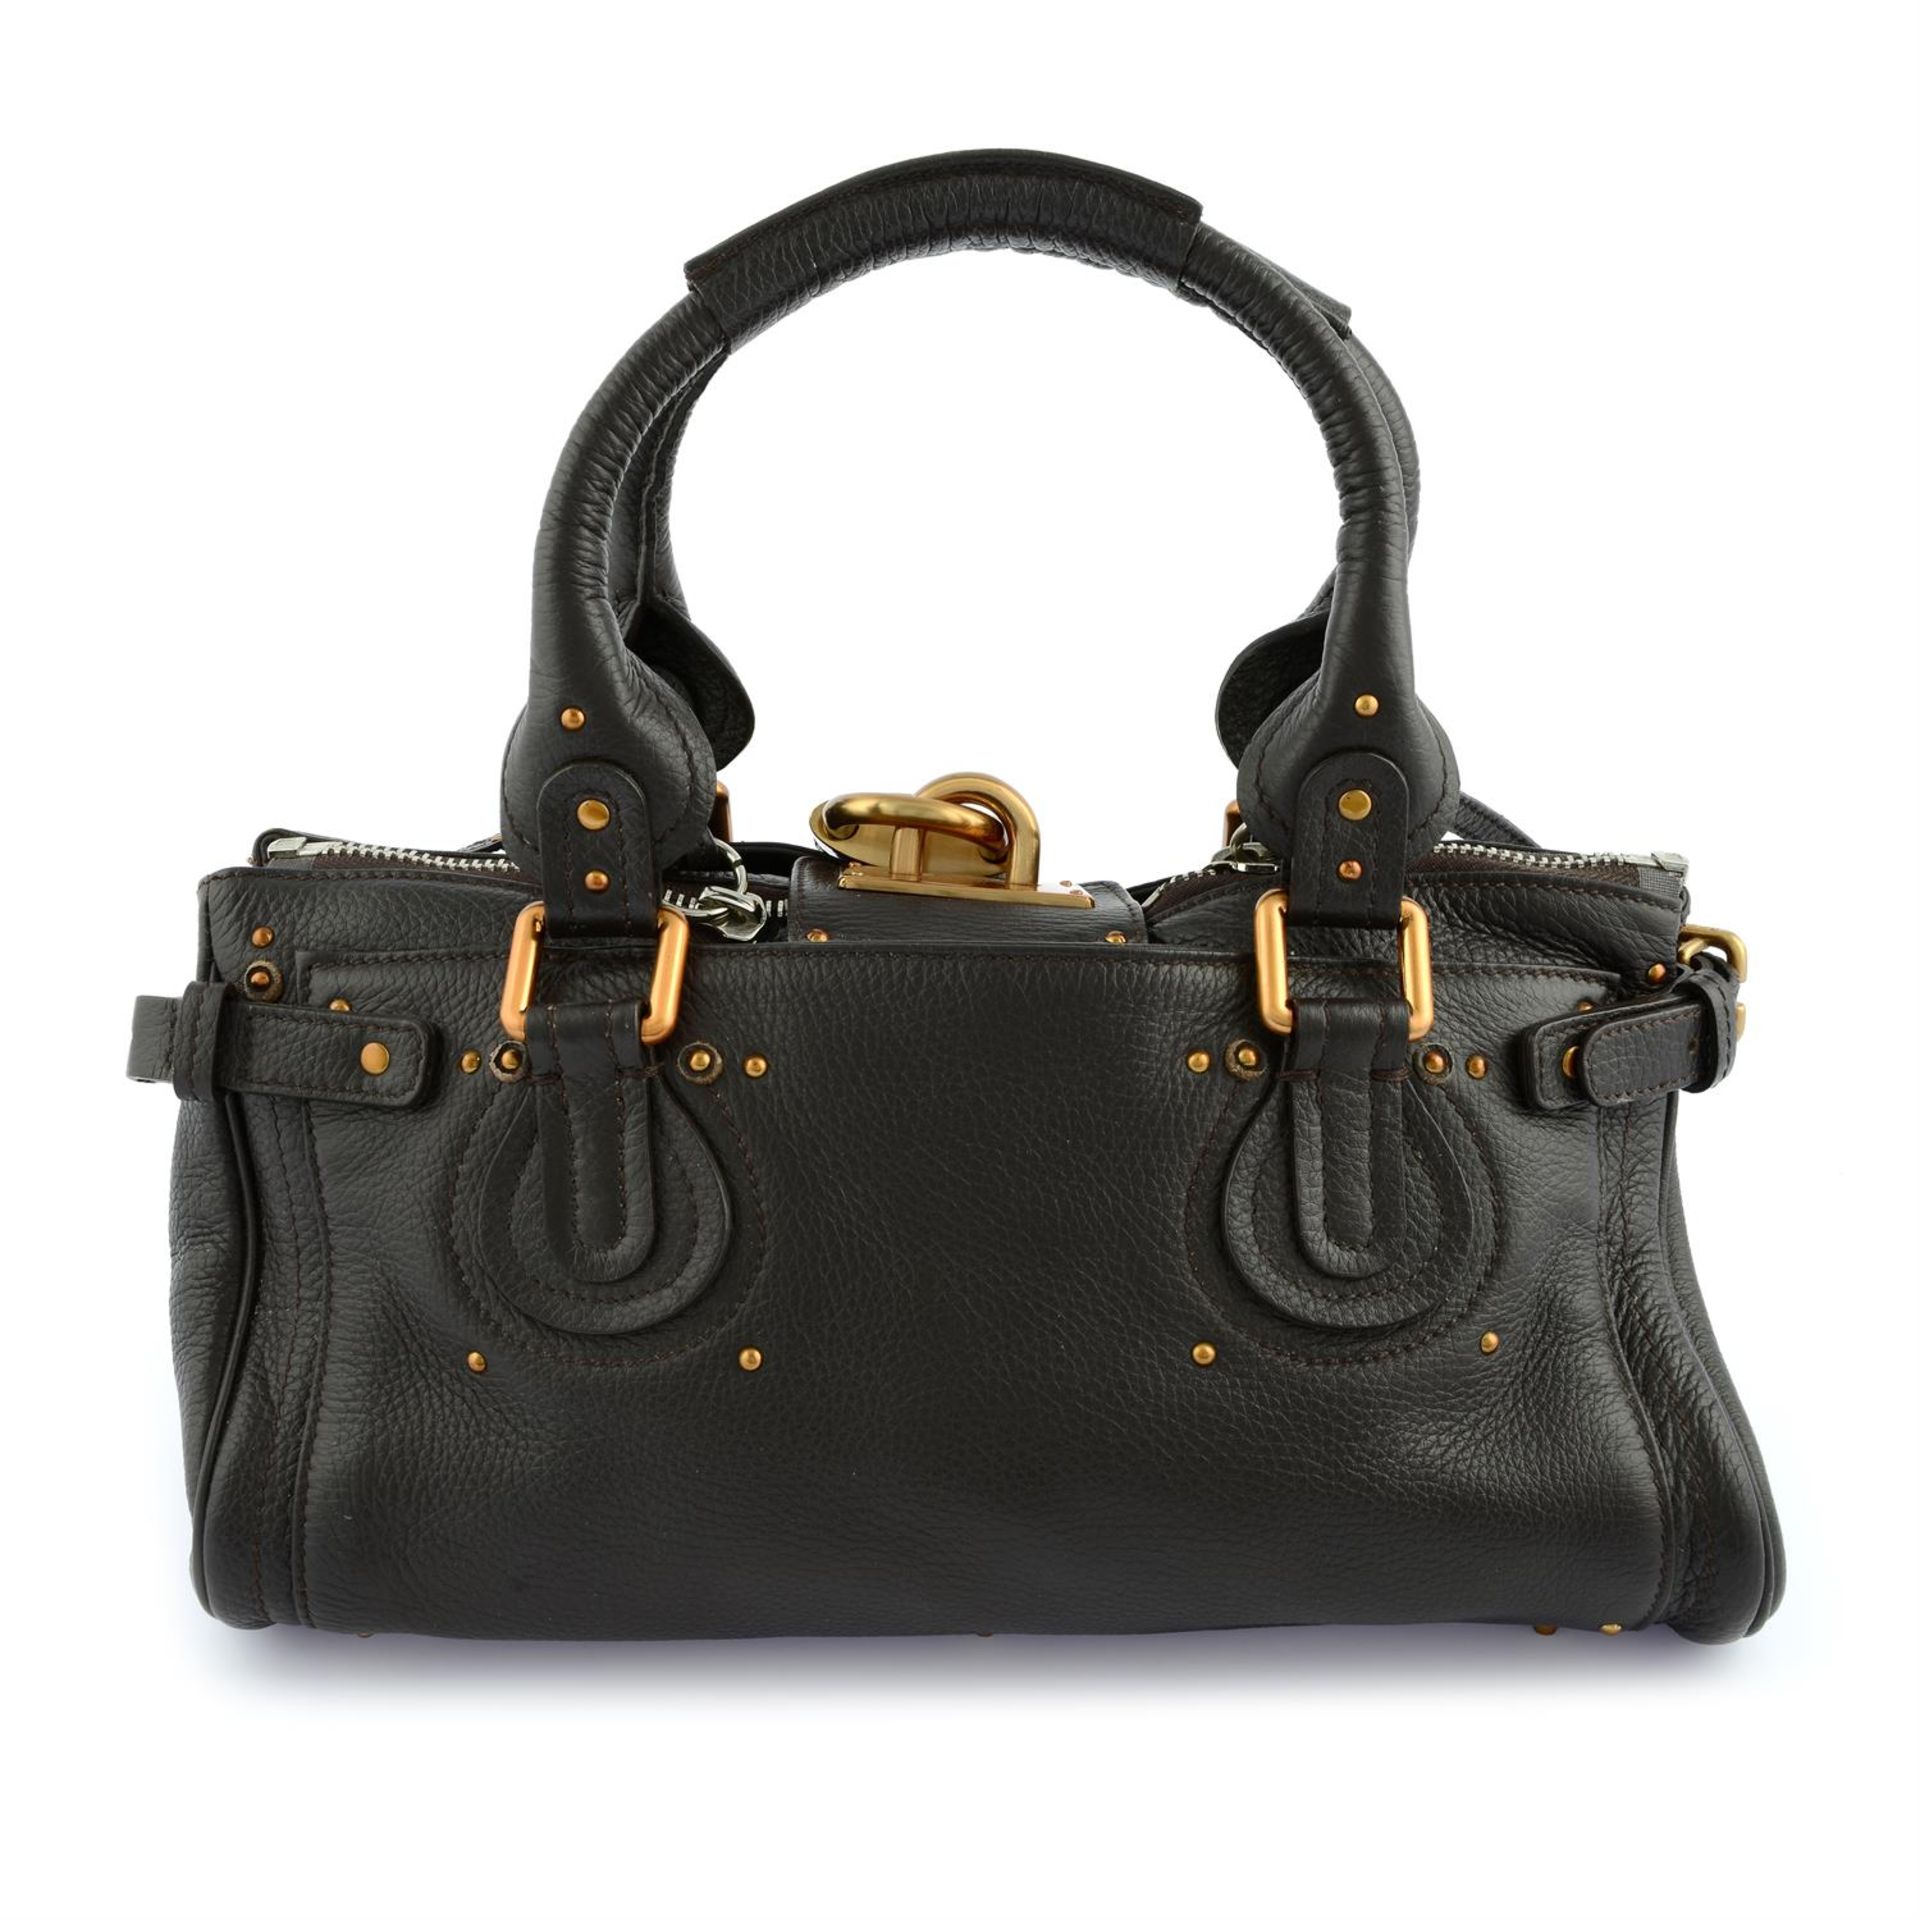 CHLOÉ- a black leather Paddington handbag. - Image 2 of 4